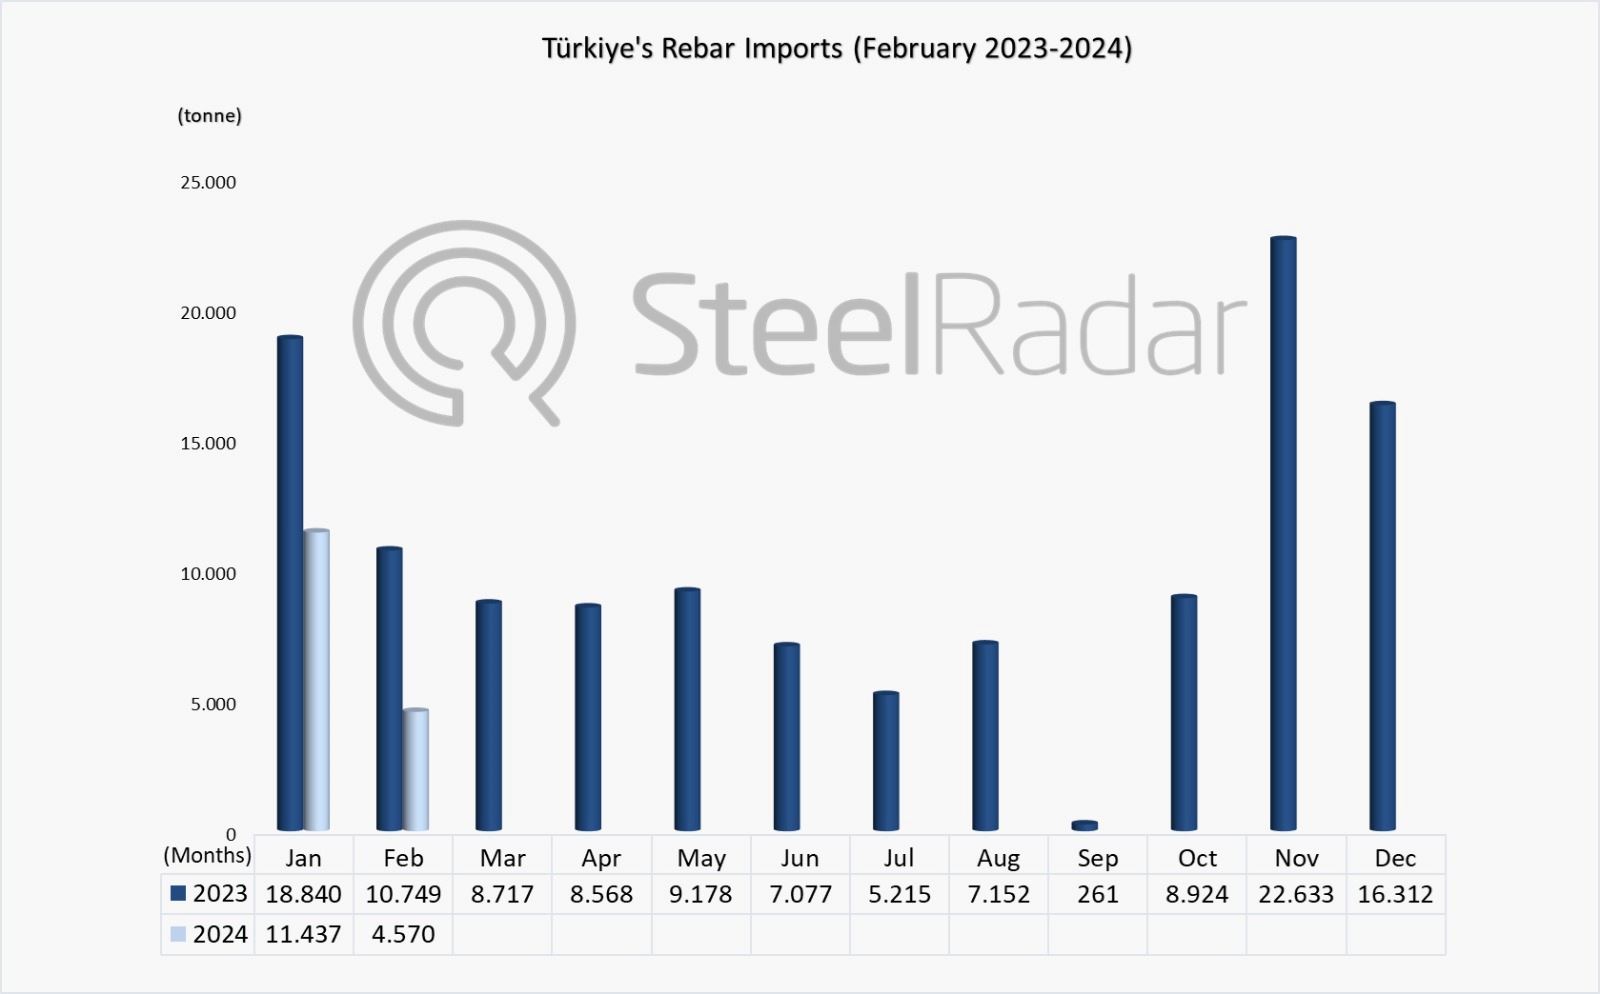 Türkiye's rebar imports decreased by 57.5% in February